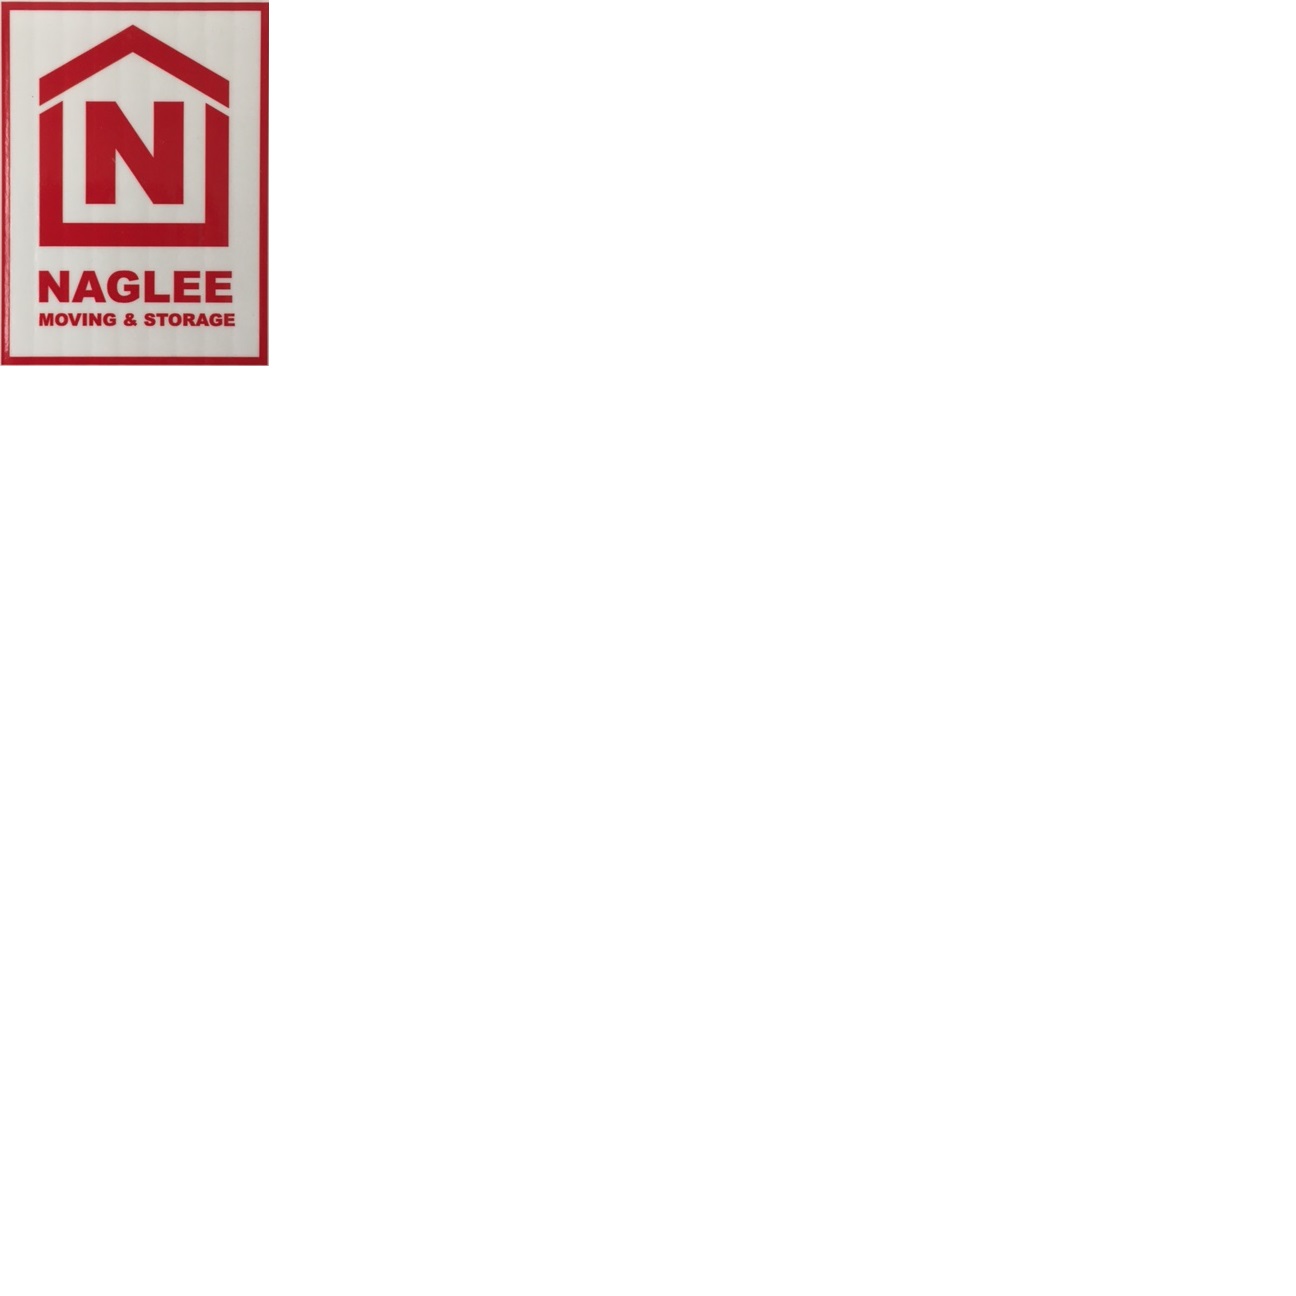 Naglee Moving & Storage, Inc.